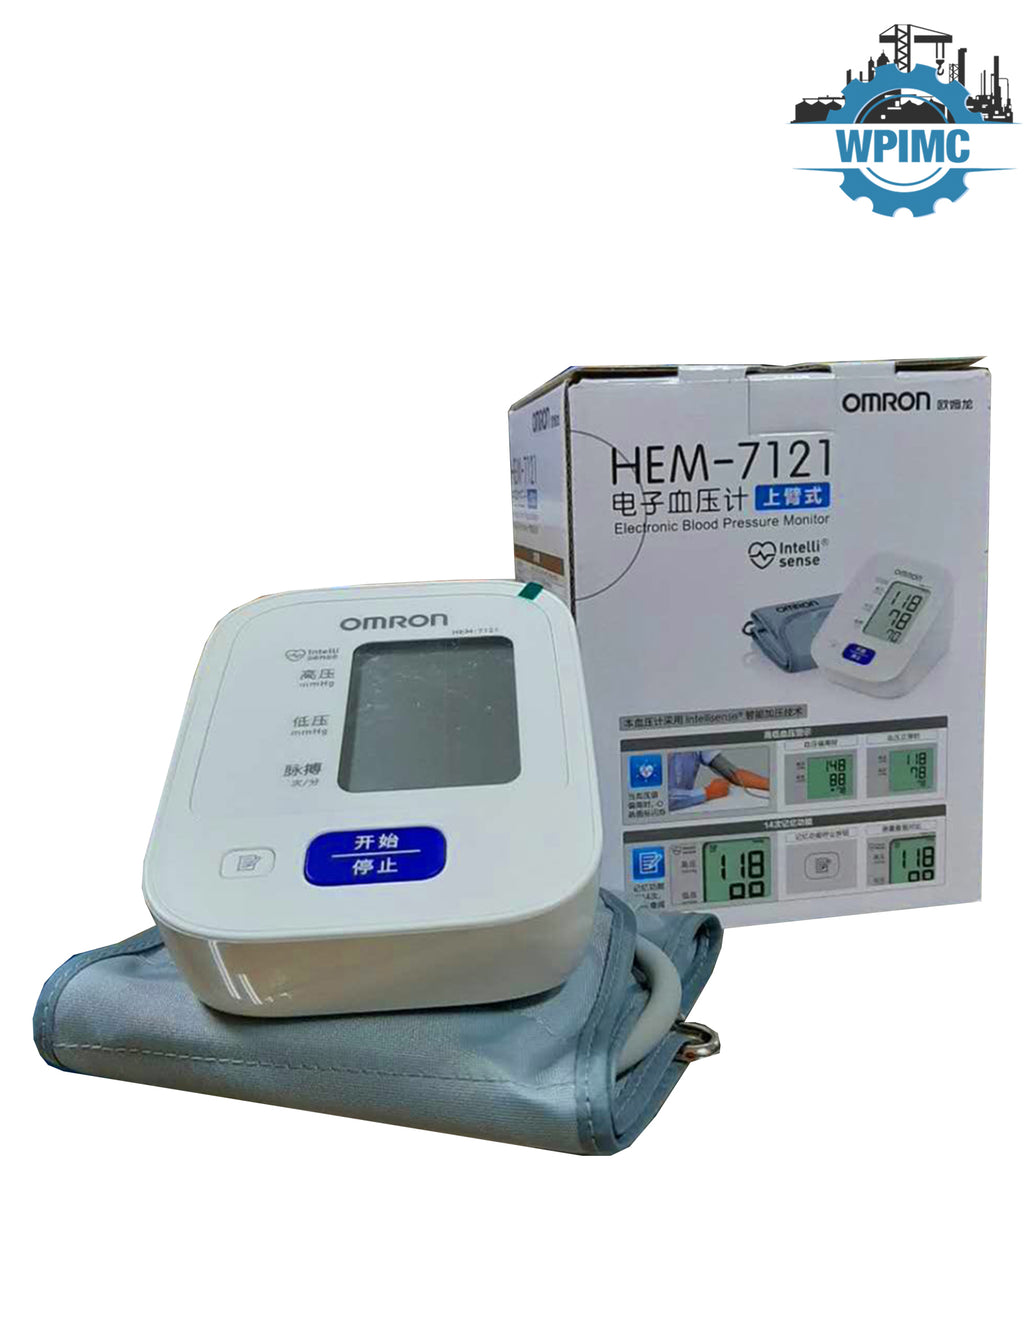 ELECTRONIC BLOOD PRESSURE MONITOR HEM - 7121